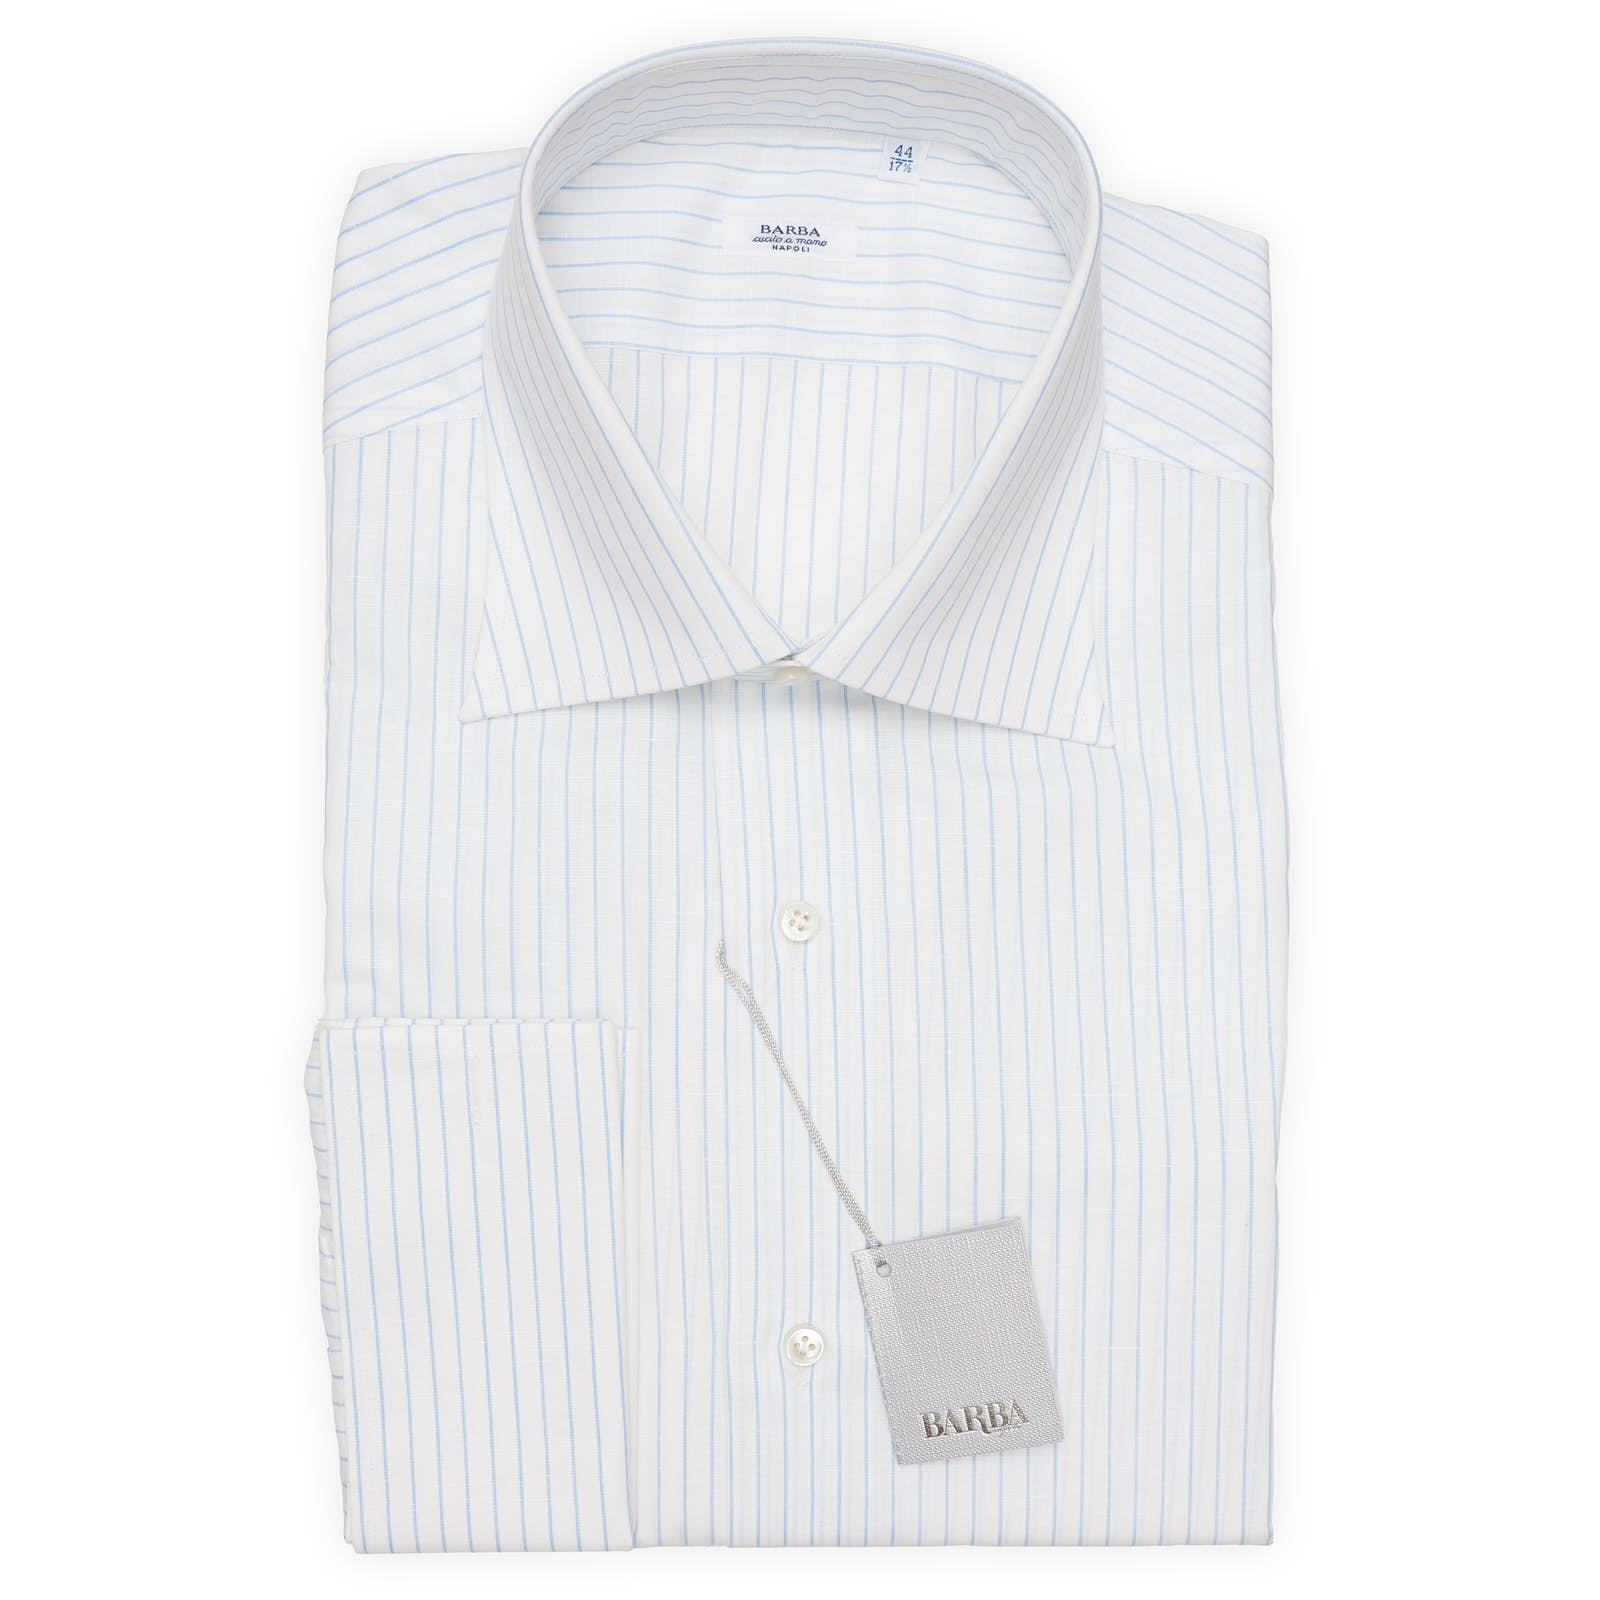 BARBA Handmade Striped Cotton-Linen French Cuff Dress Shirt EU 44 NEW US 17.5